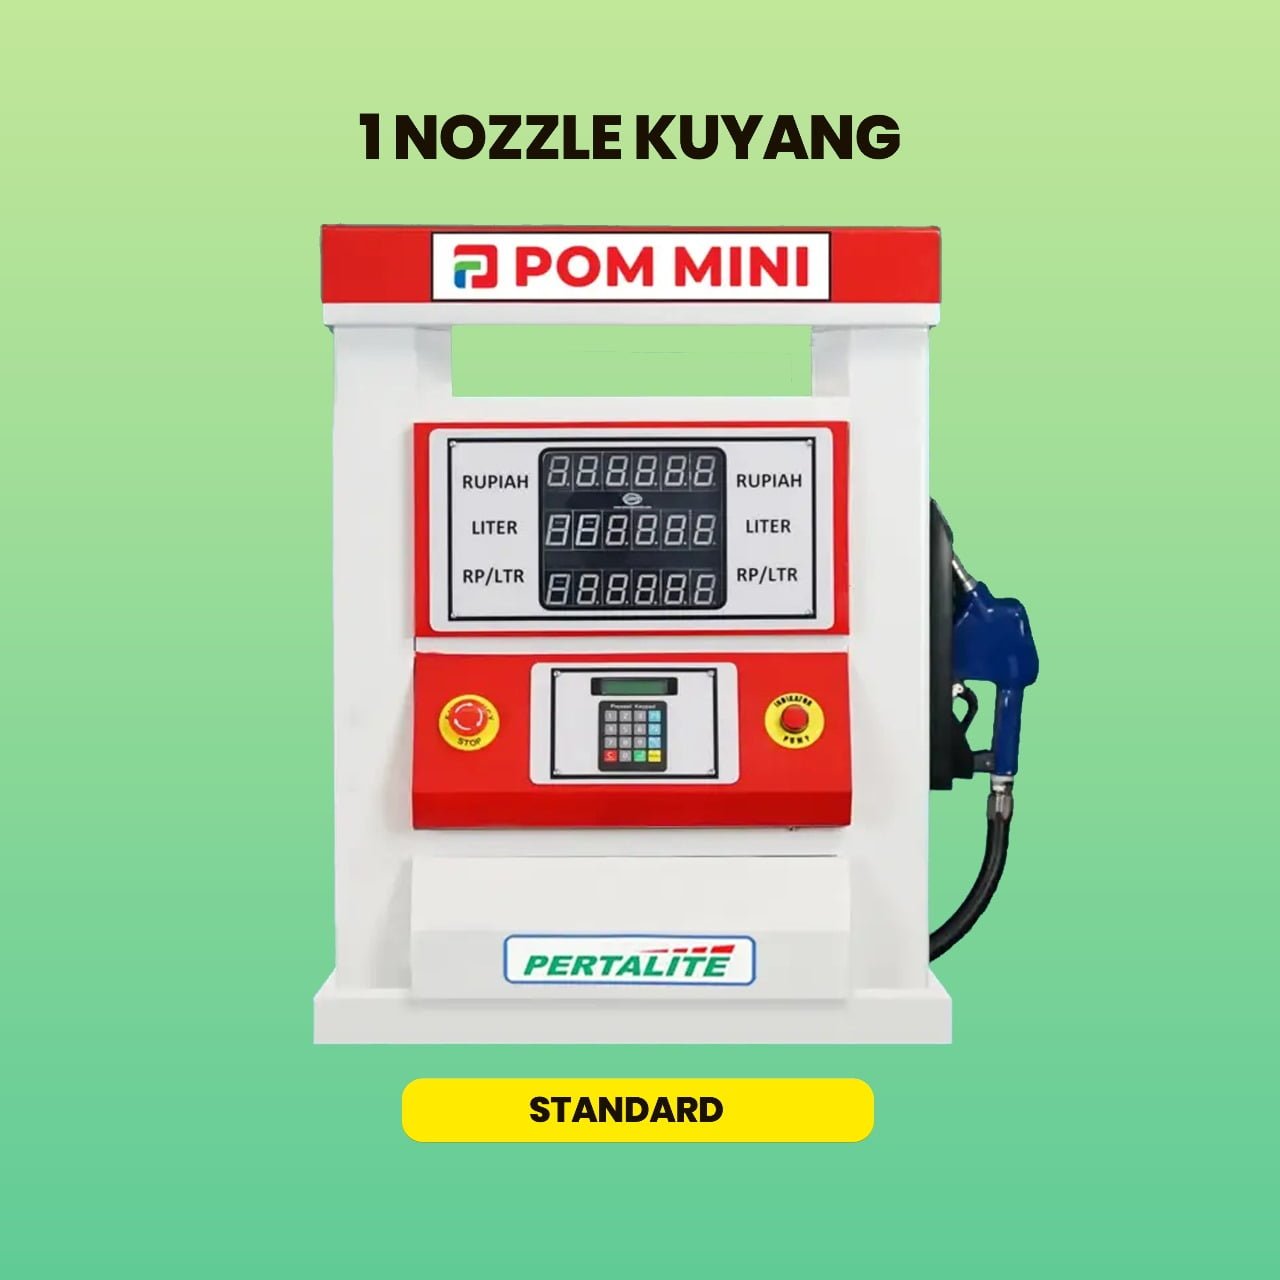 pom_mini_1_nozzle-kuyang